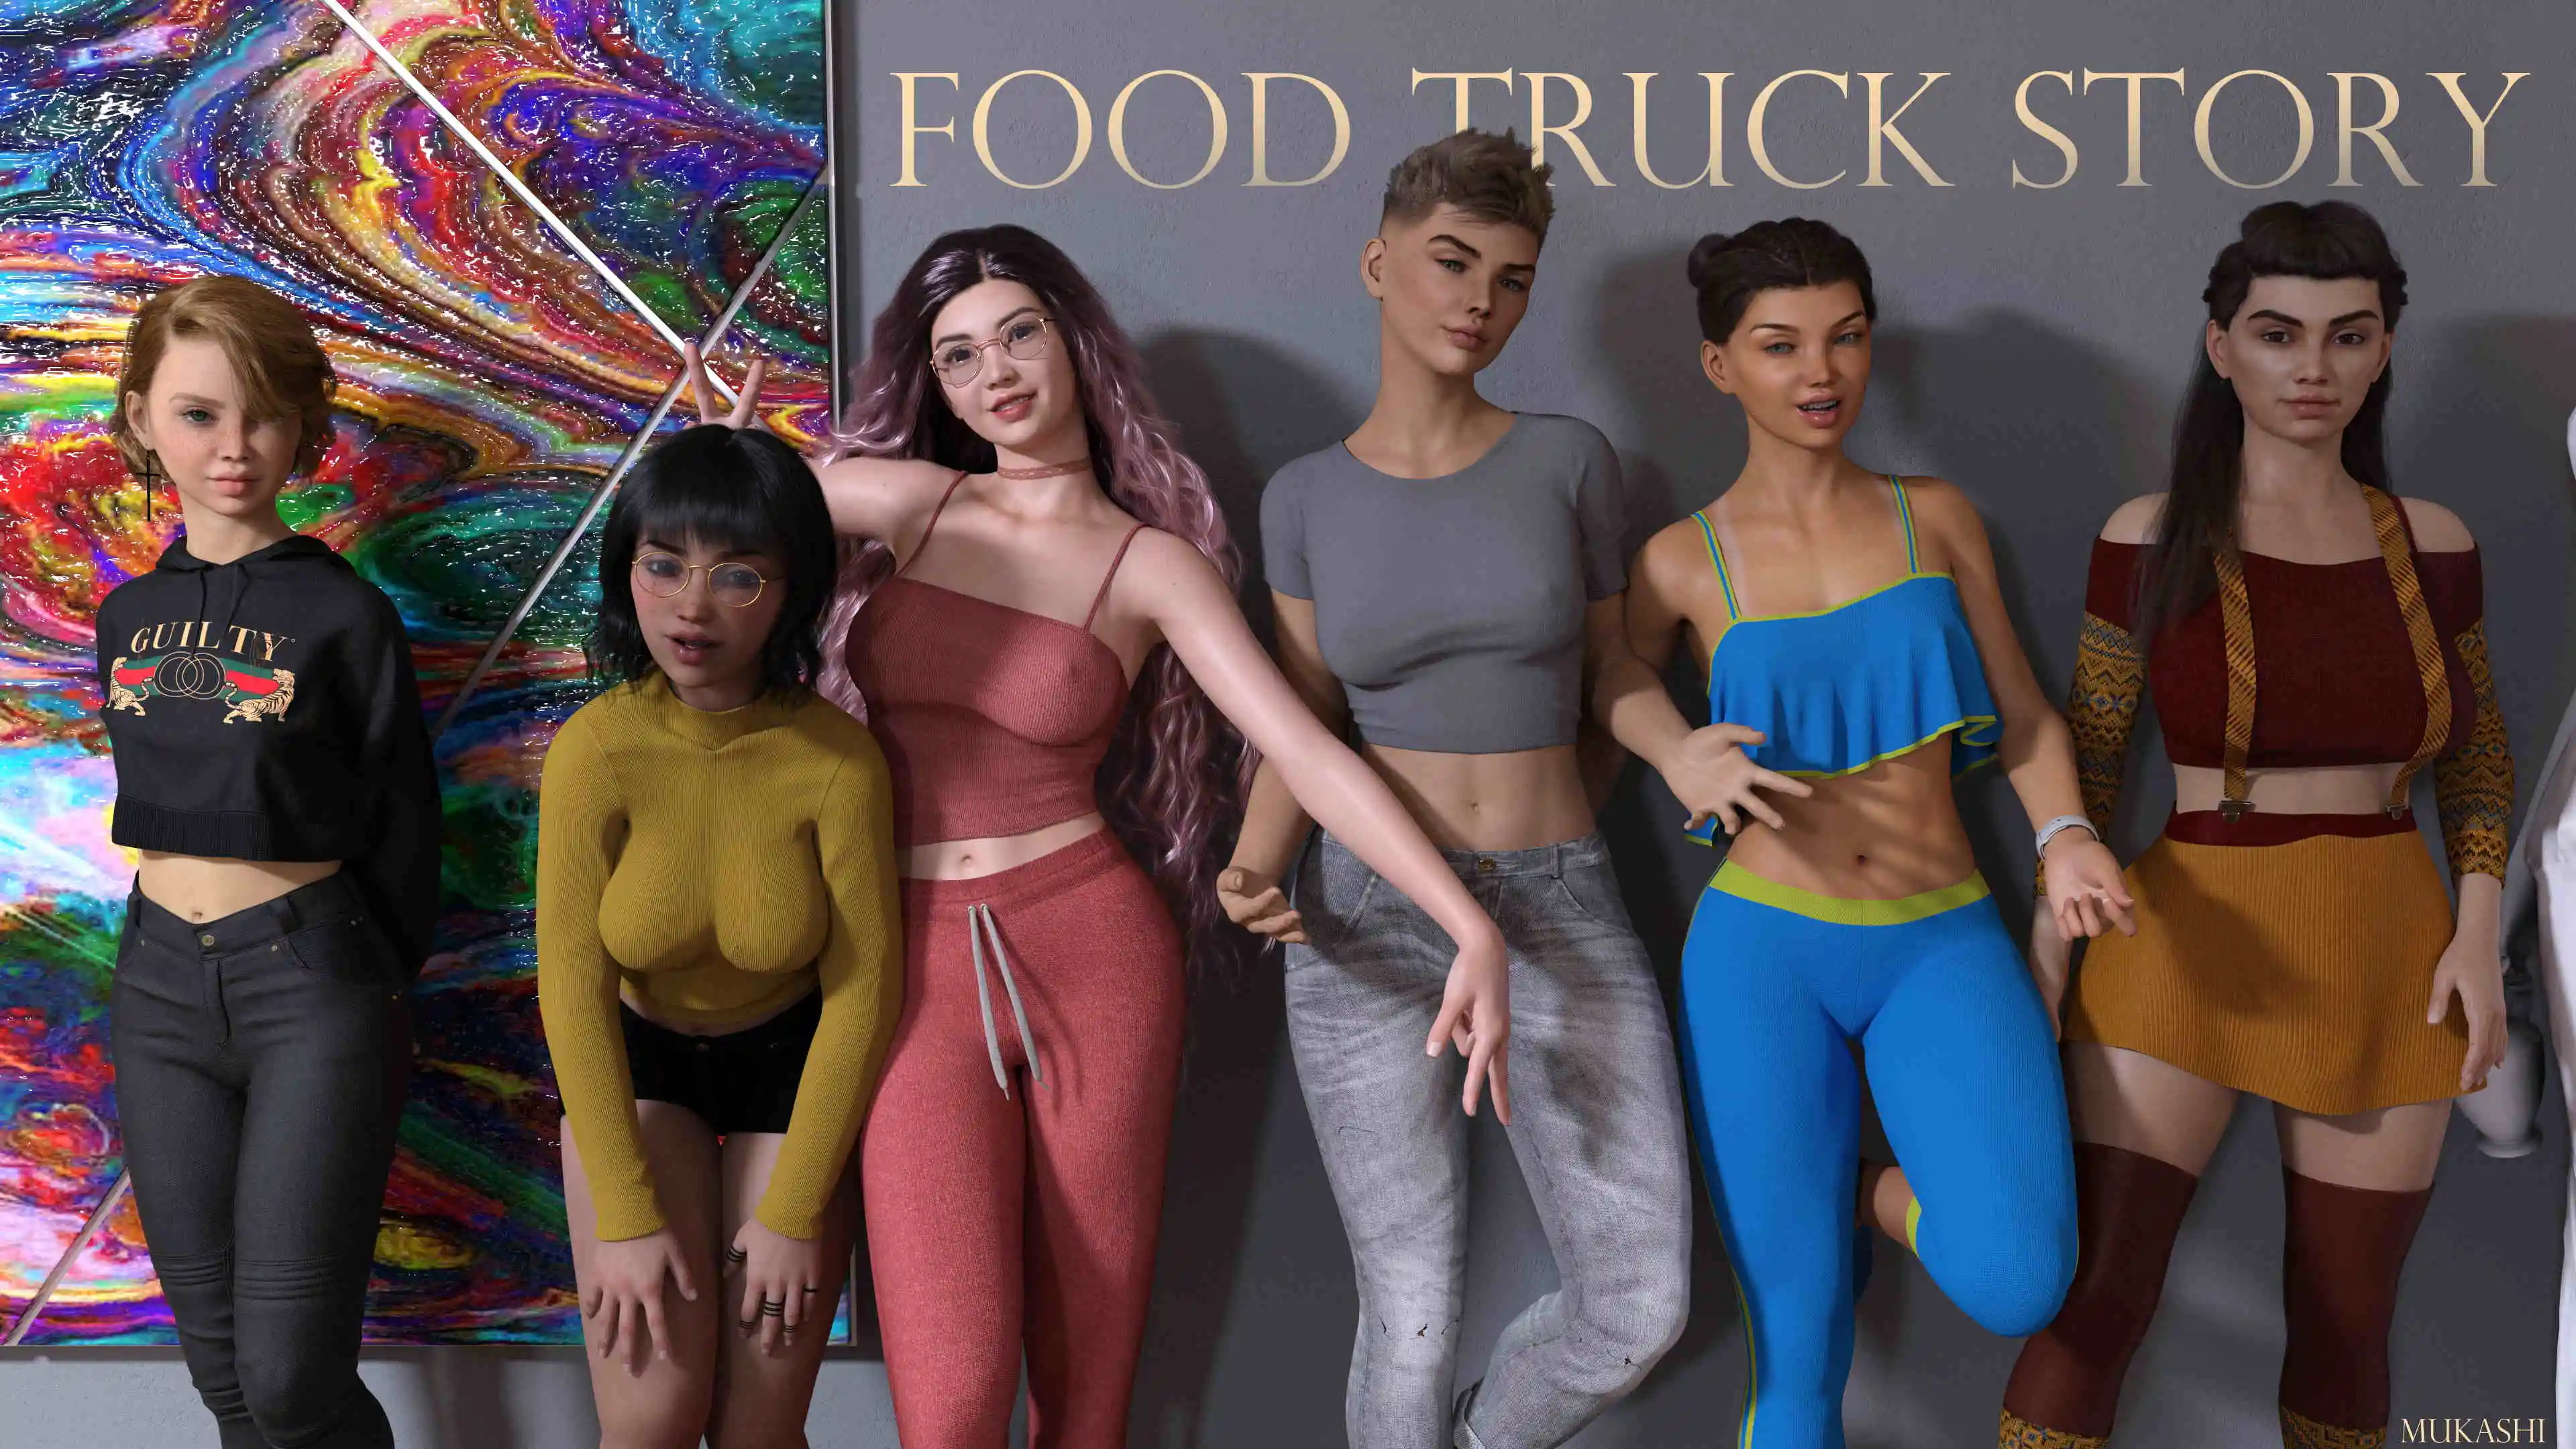 Food Truck Story main image